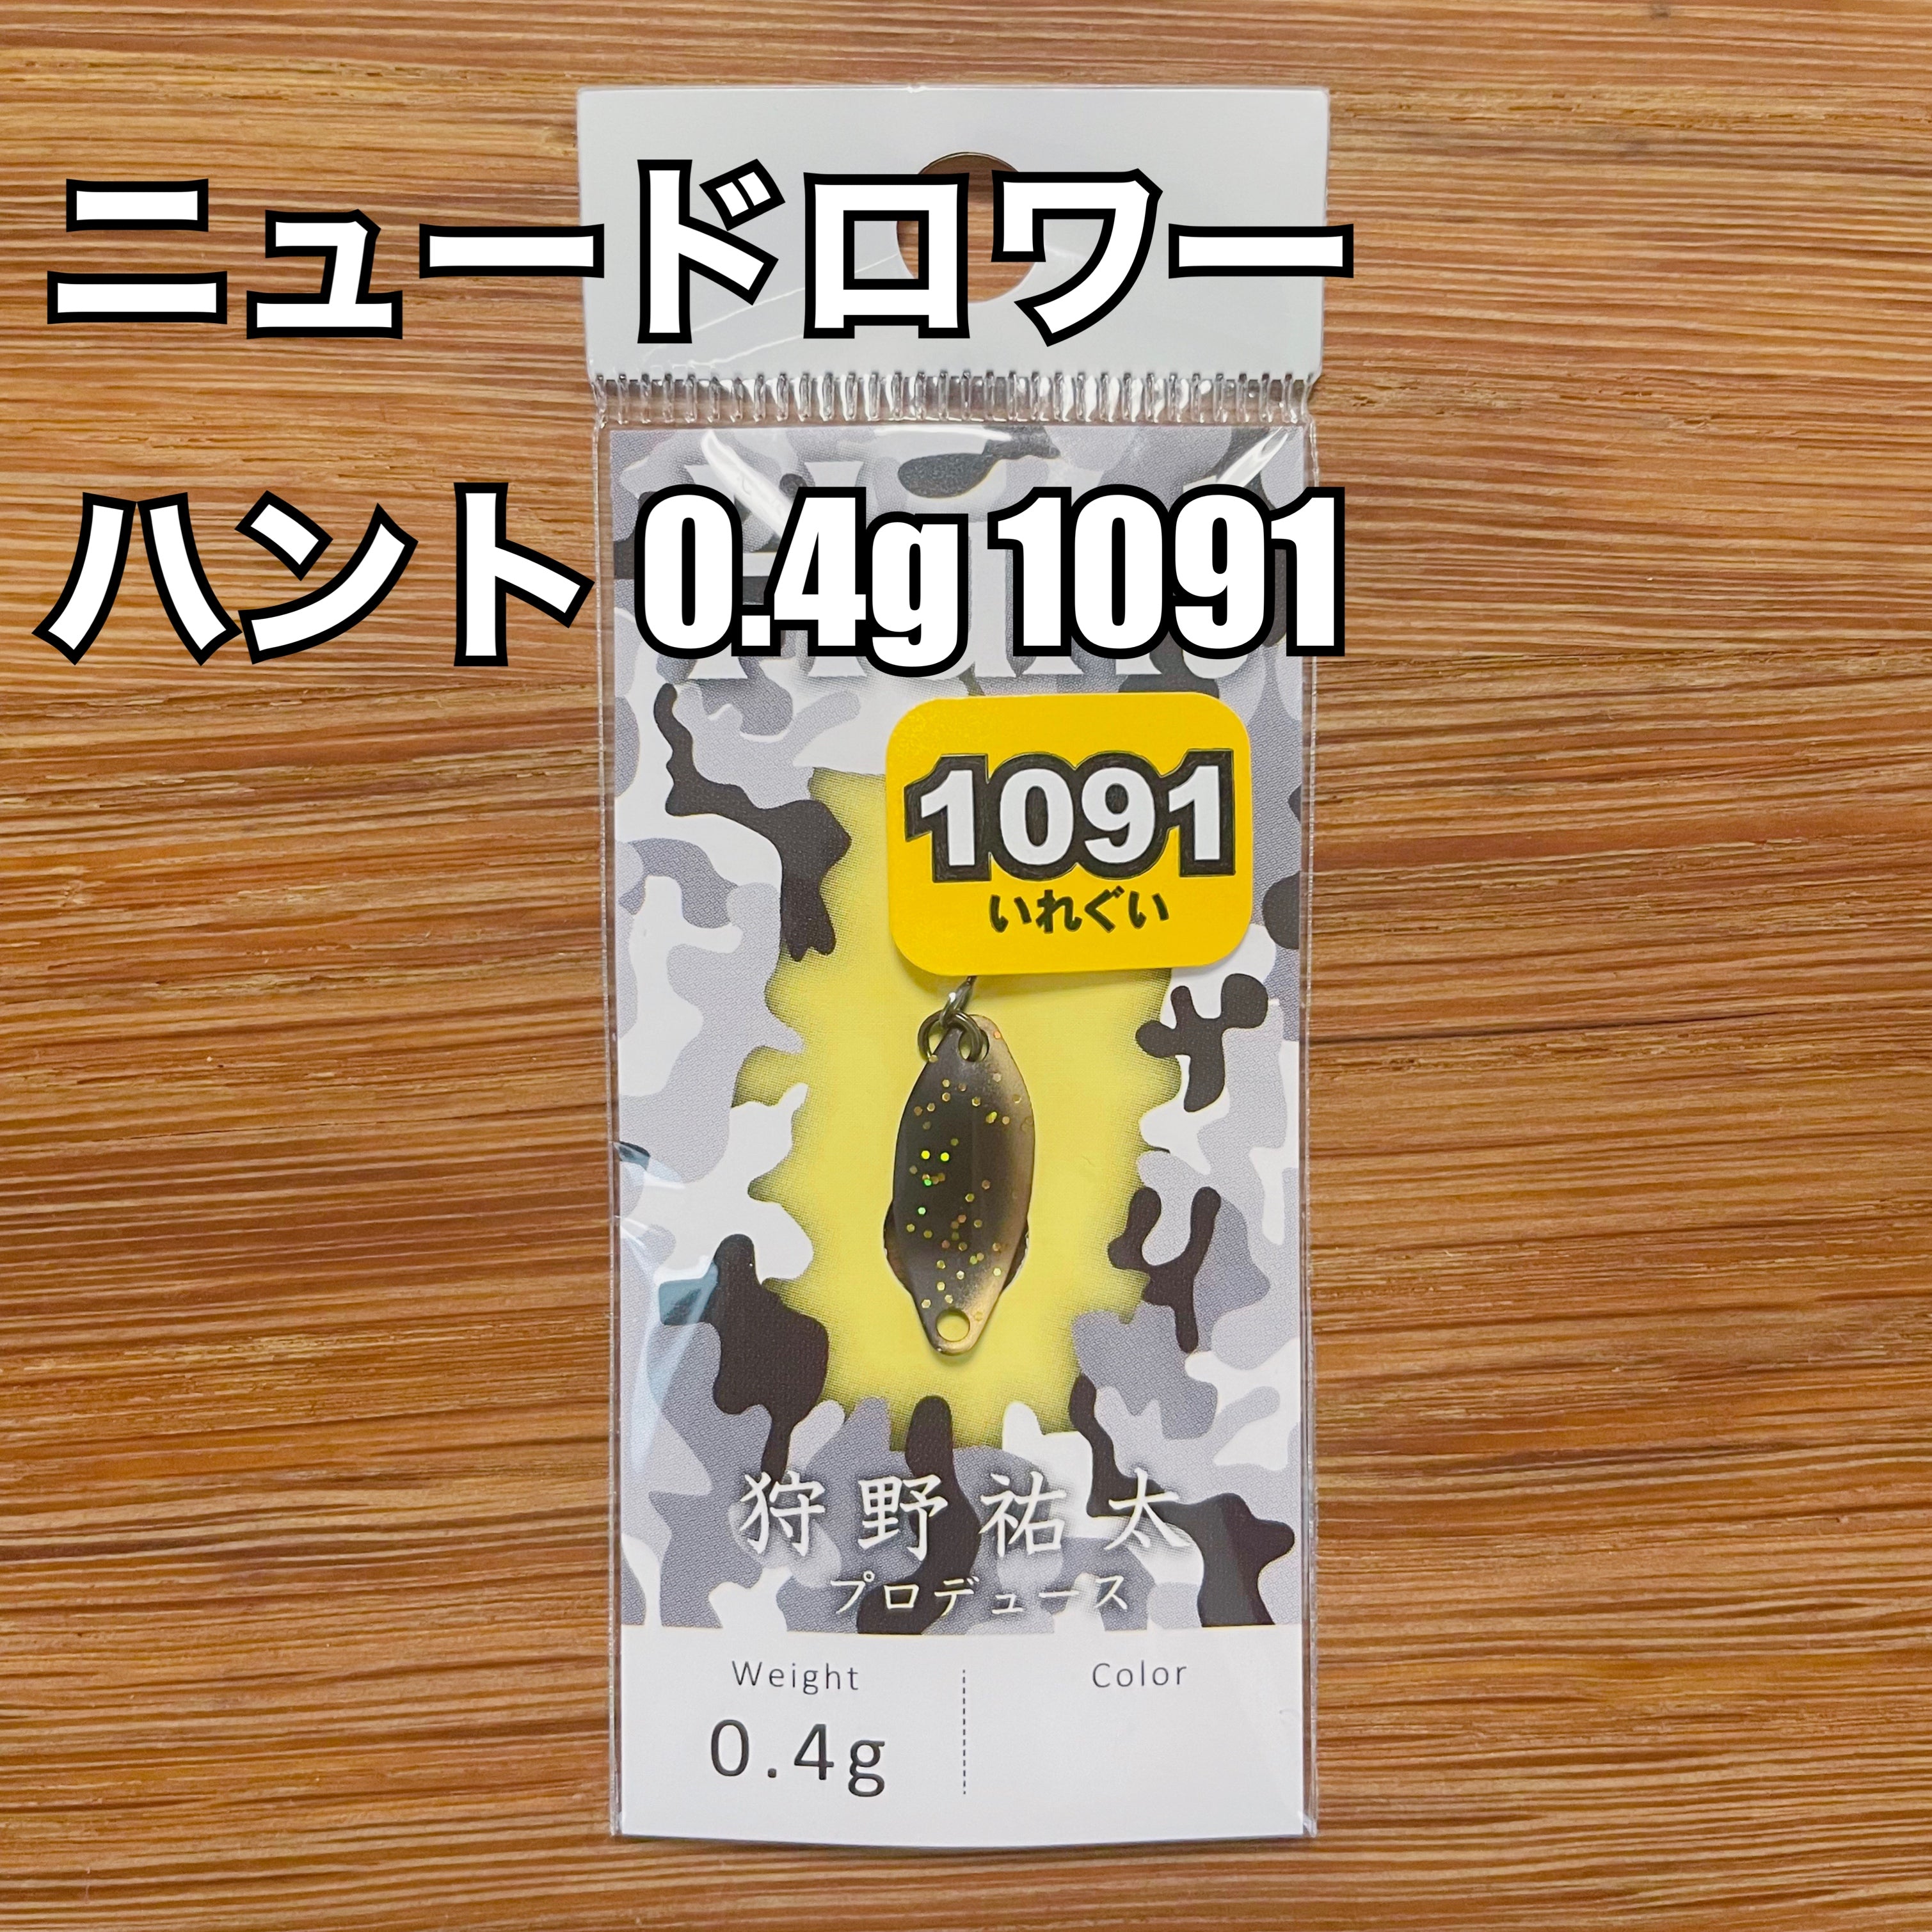 New Drawer Hunt(ハント) 0.4g 1091